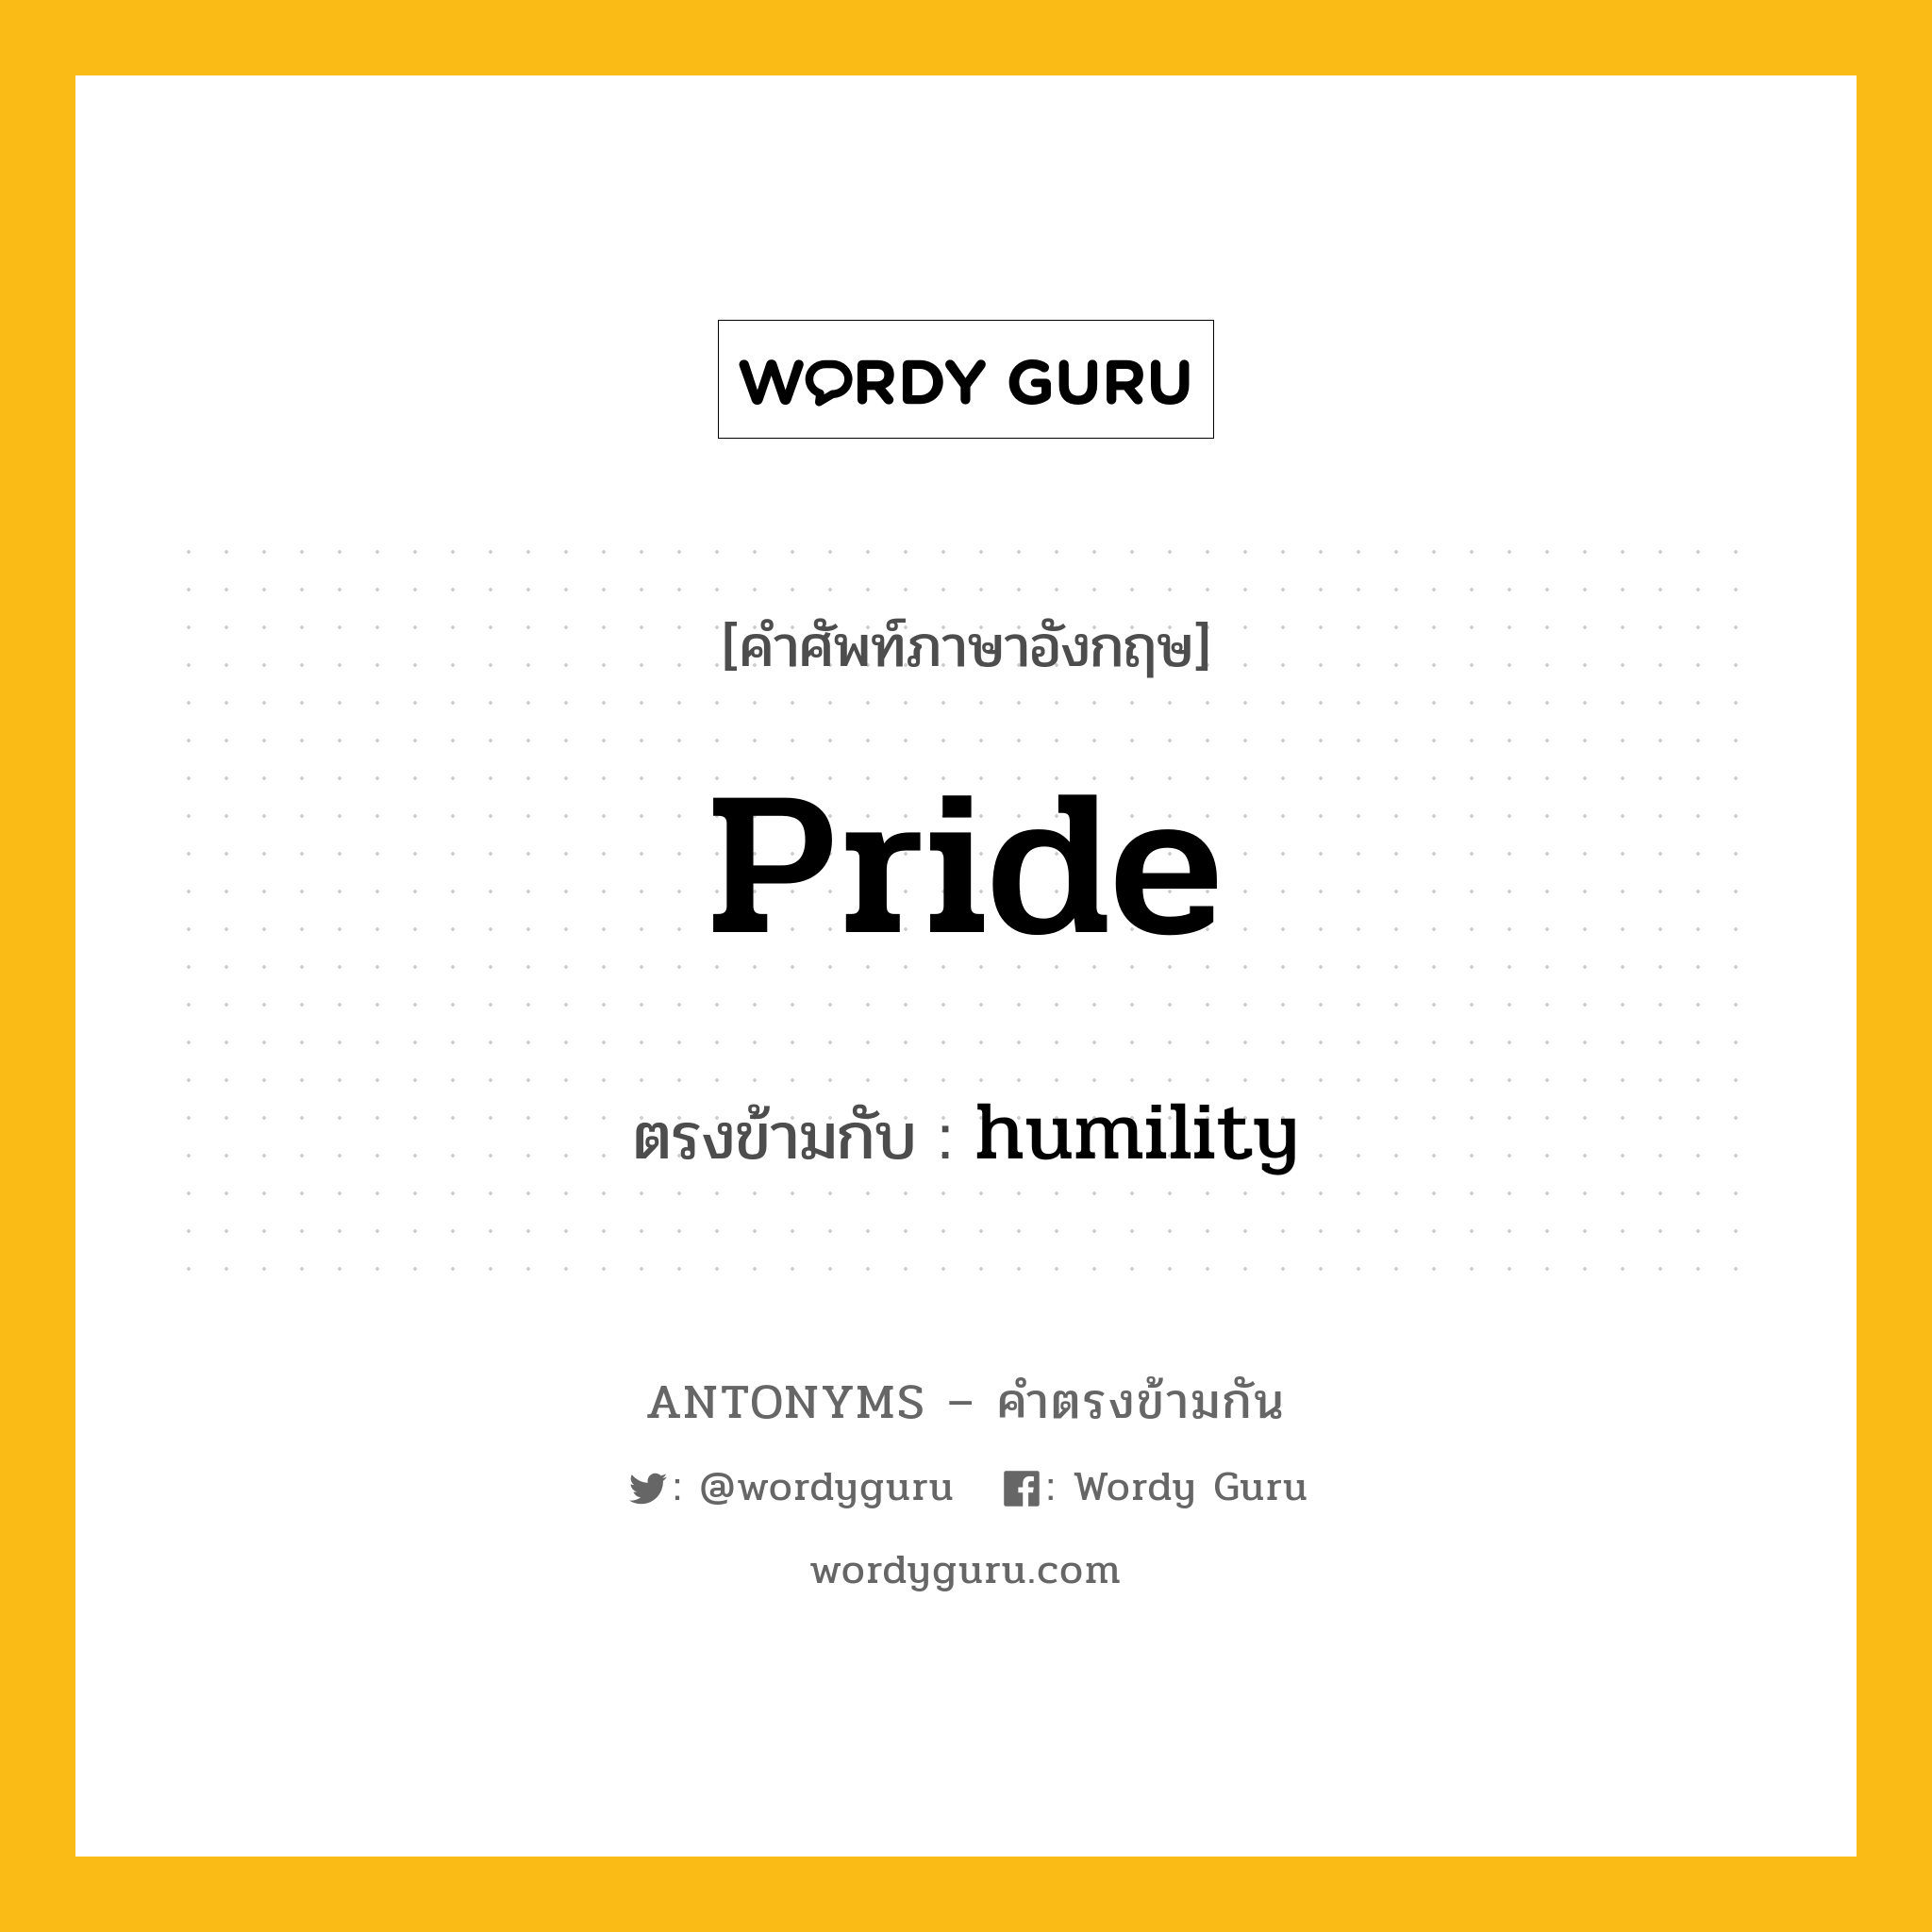 pride เป็นคำตรงข้ามกับคำไหนบ้าง?, คำศัพท์ภาษาอังกฤษ pride ตรงข้ามกับ humility หมวด humility